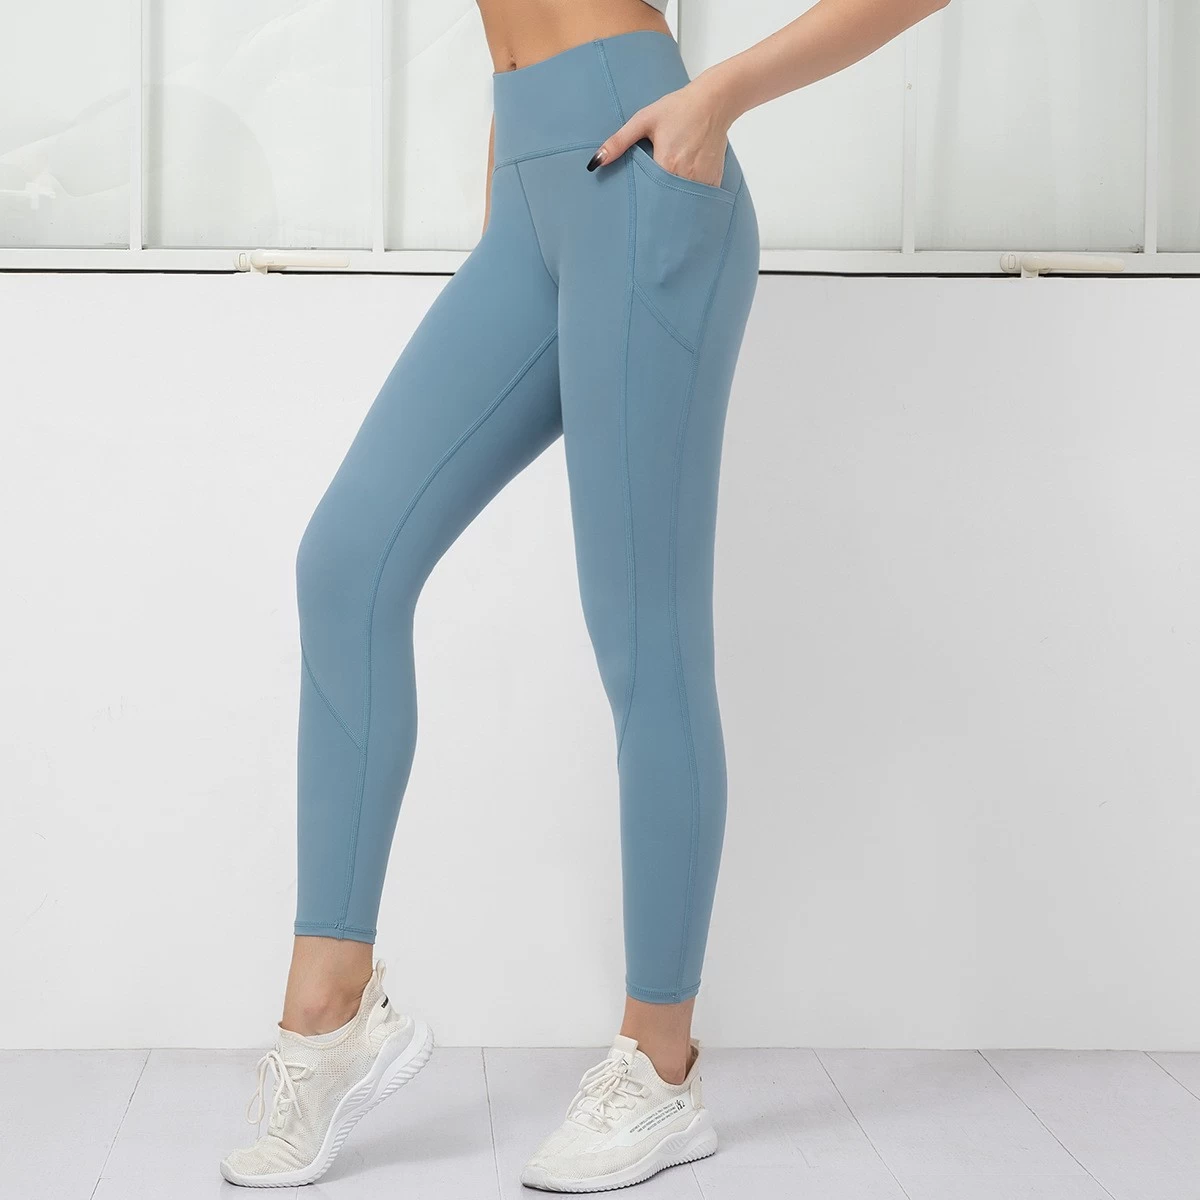 S-SHAPER Seamless Yoga Pants for Women Running Workout Nudity Fitness Leggings Side Pockets High Waist Butt Lifting Sport Legging